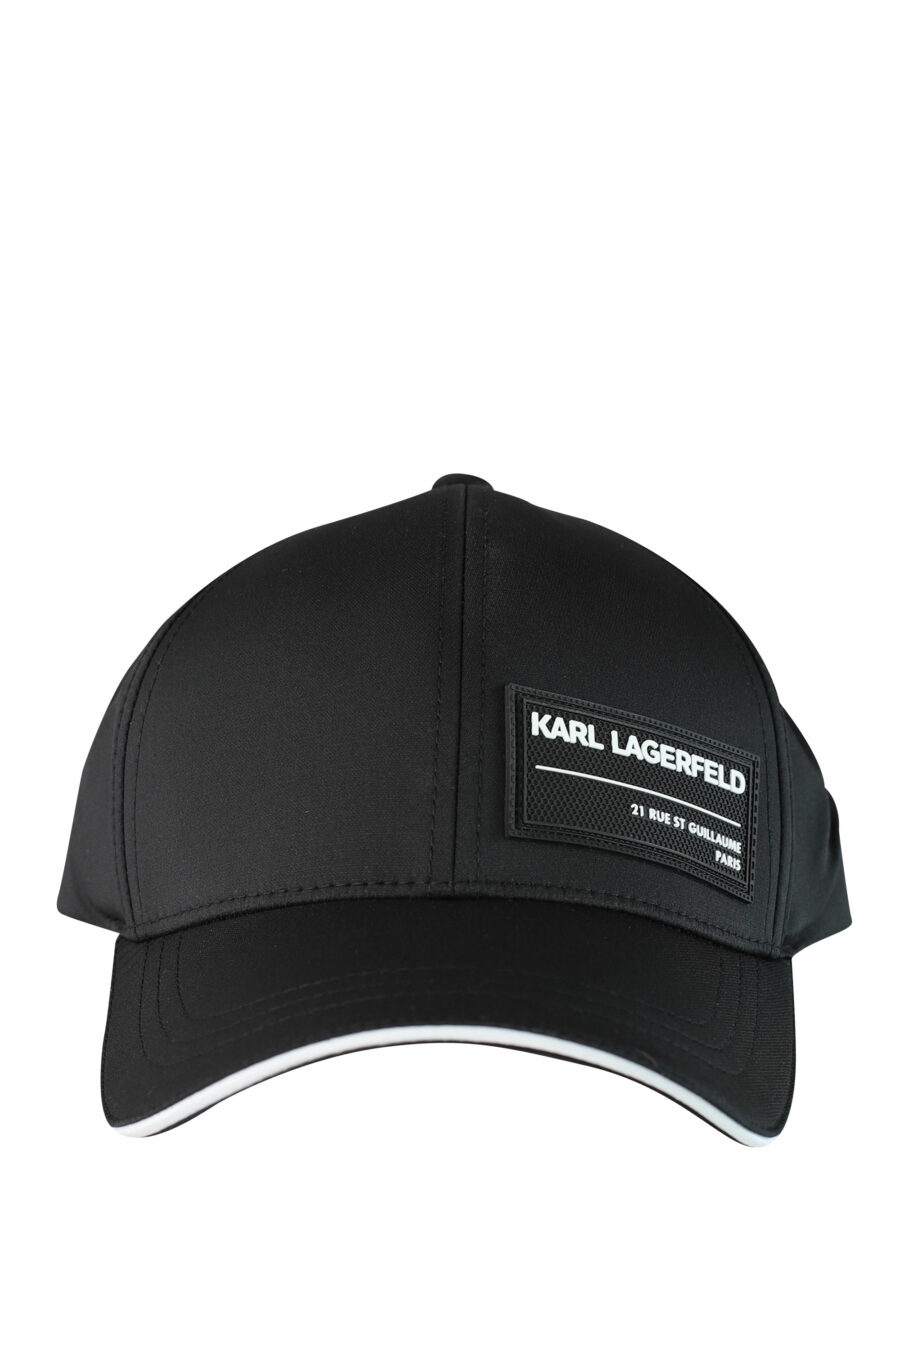 Black cap with logo label - IMG 1527